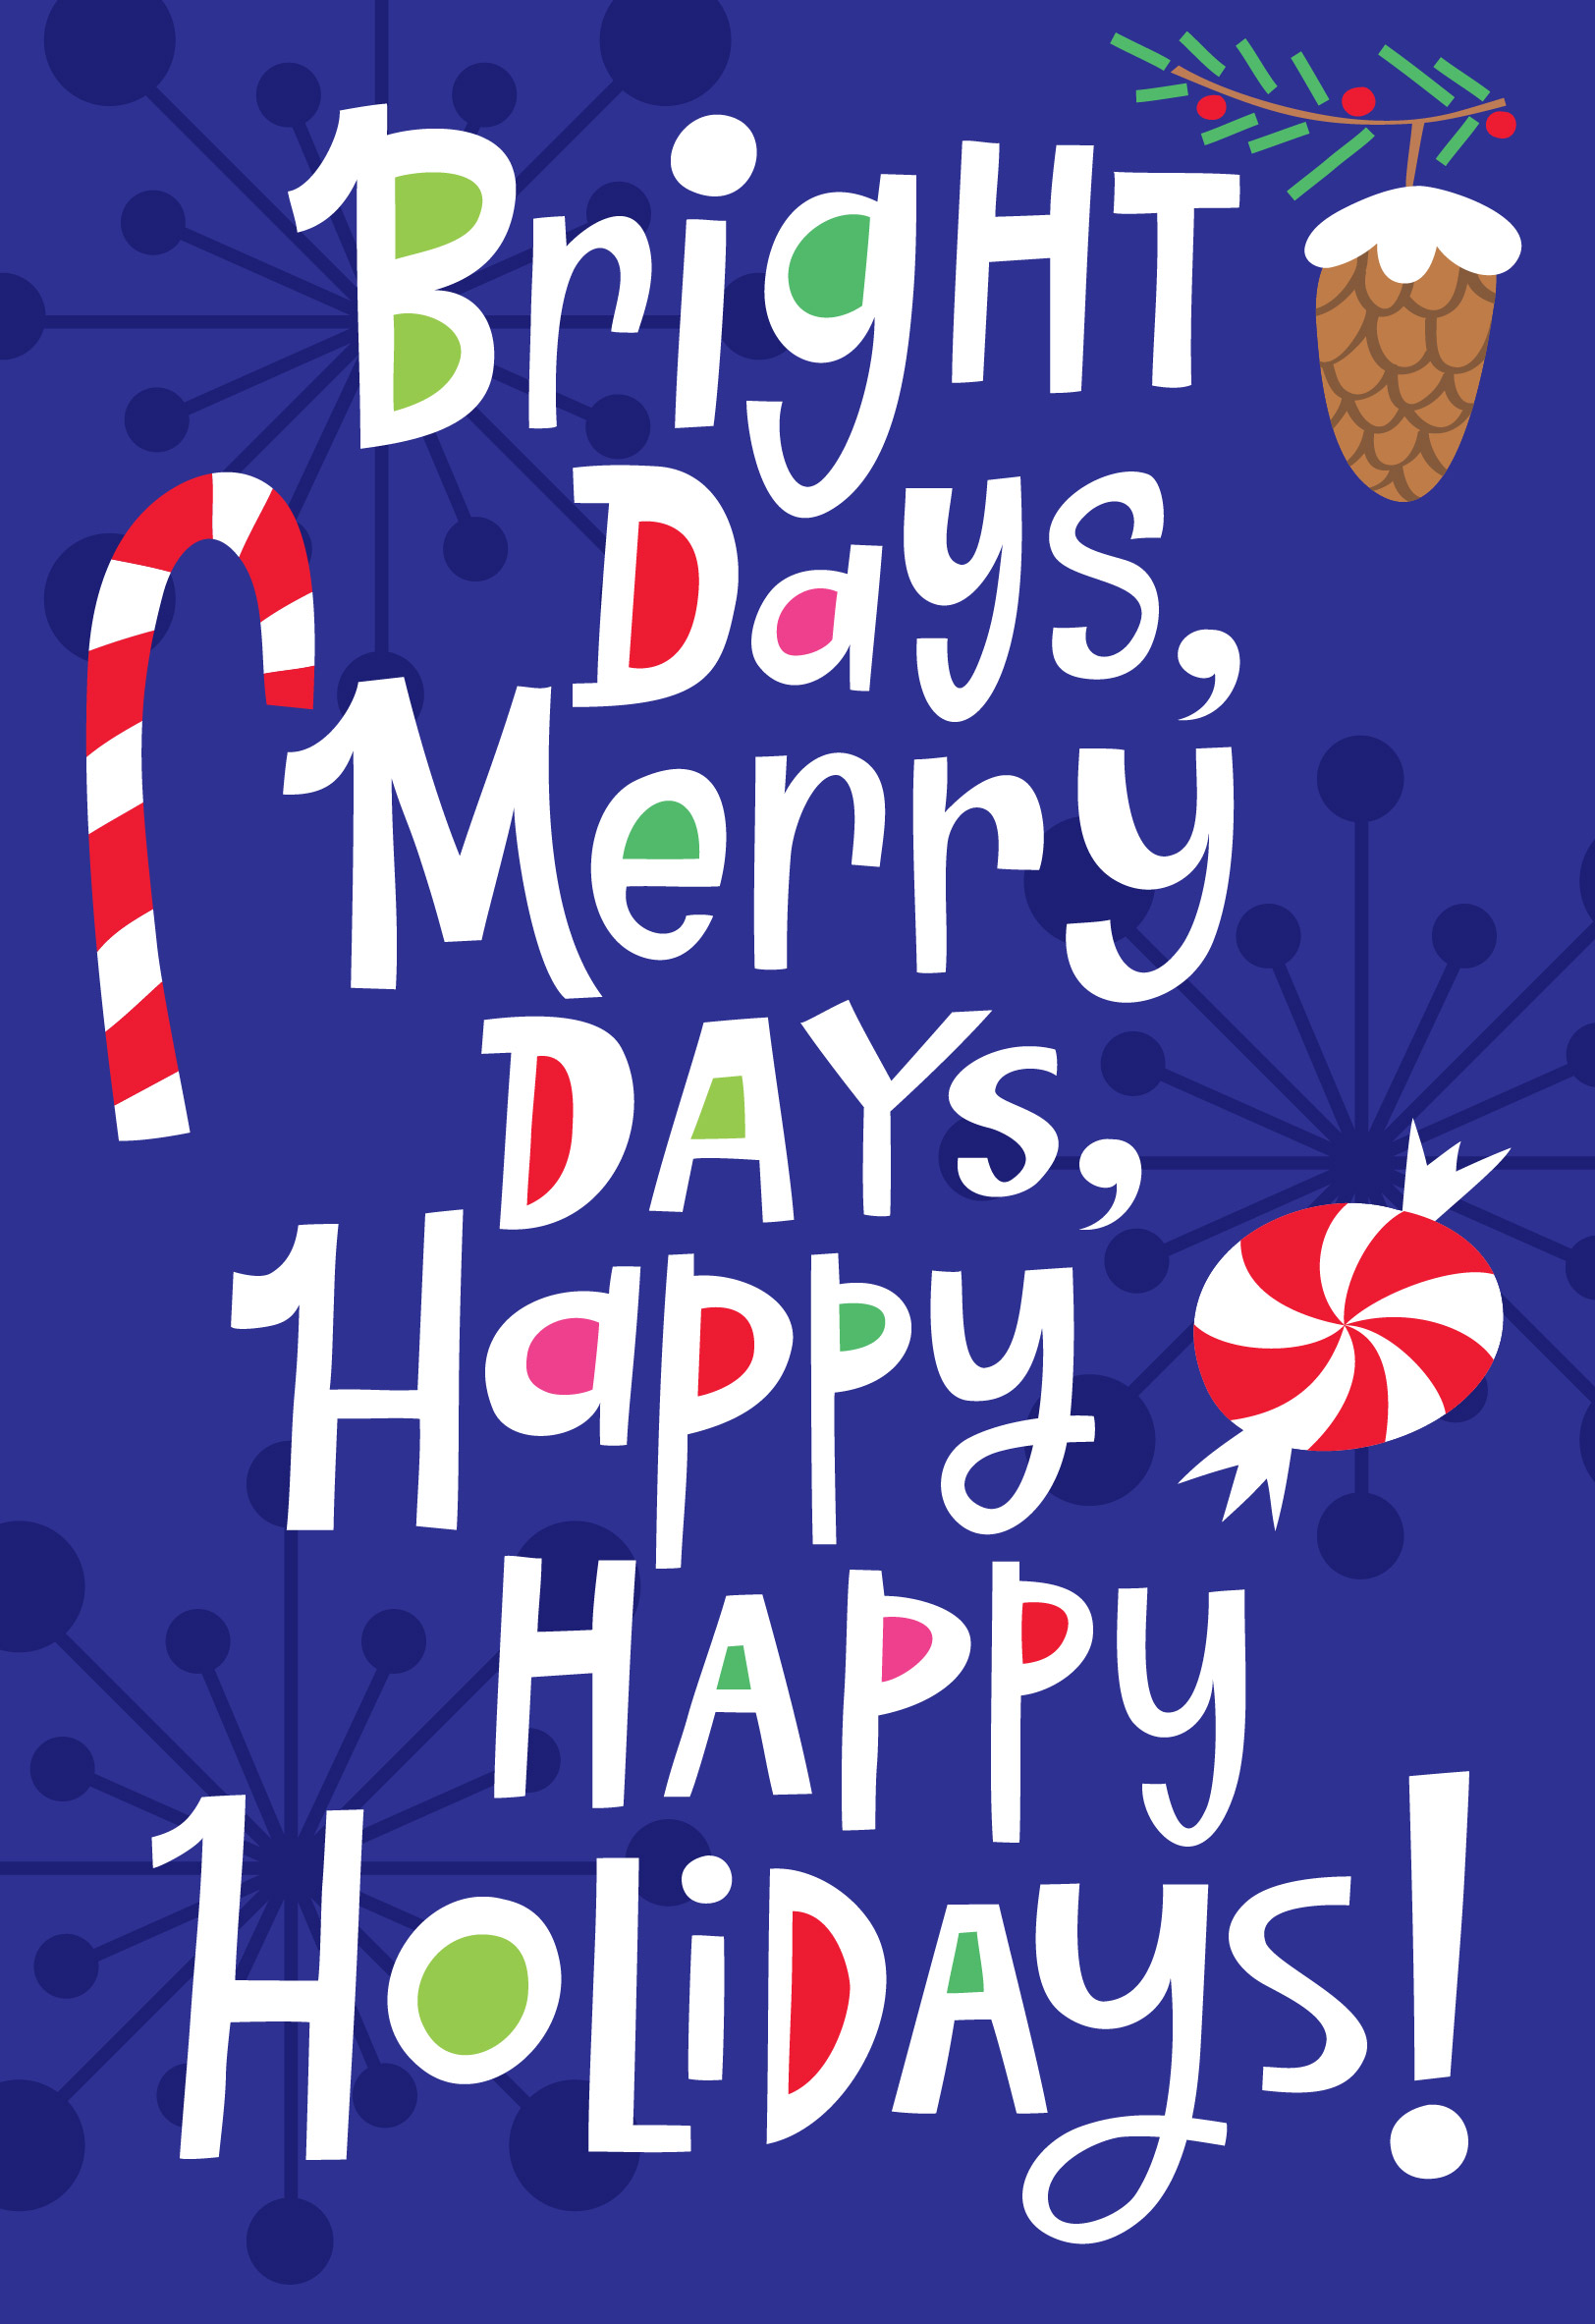 Hand Lettering Holiday Illustration for Hallmark